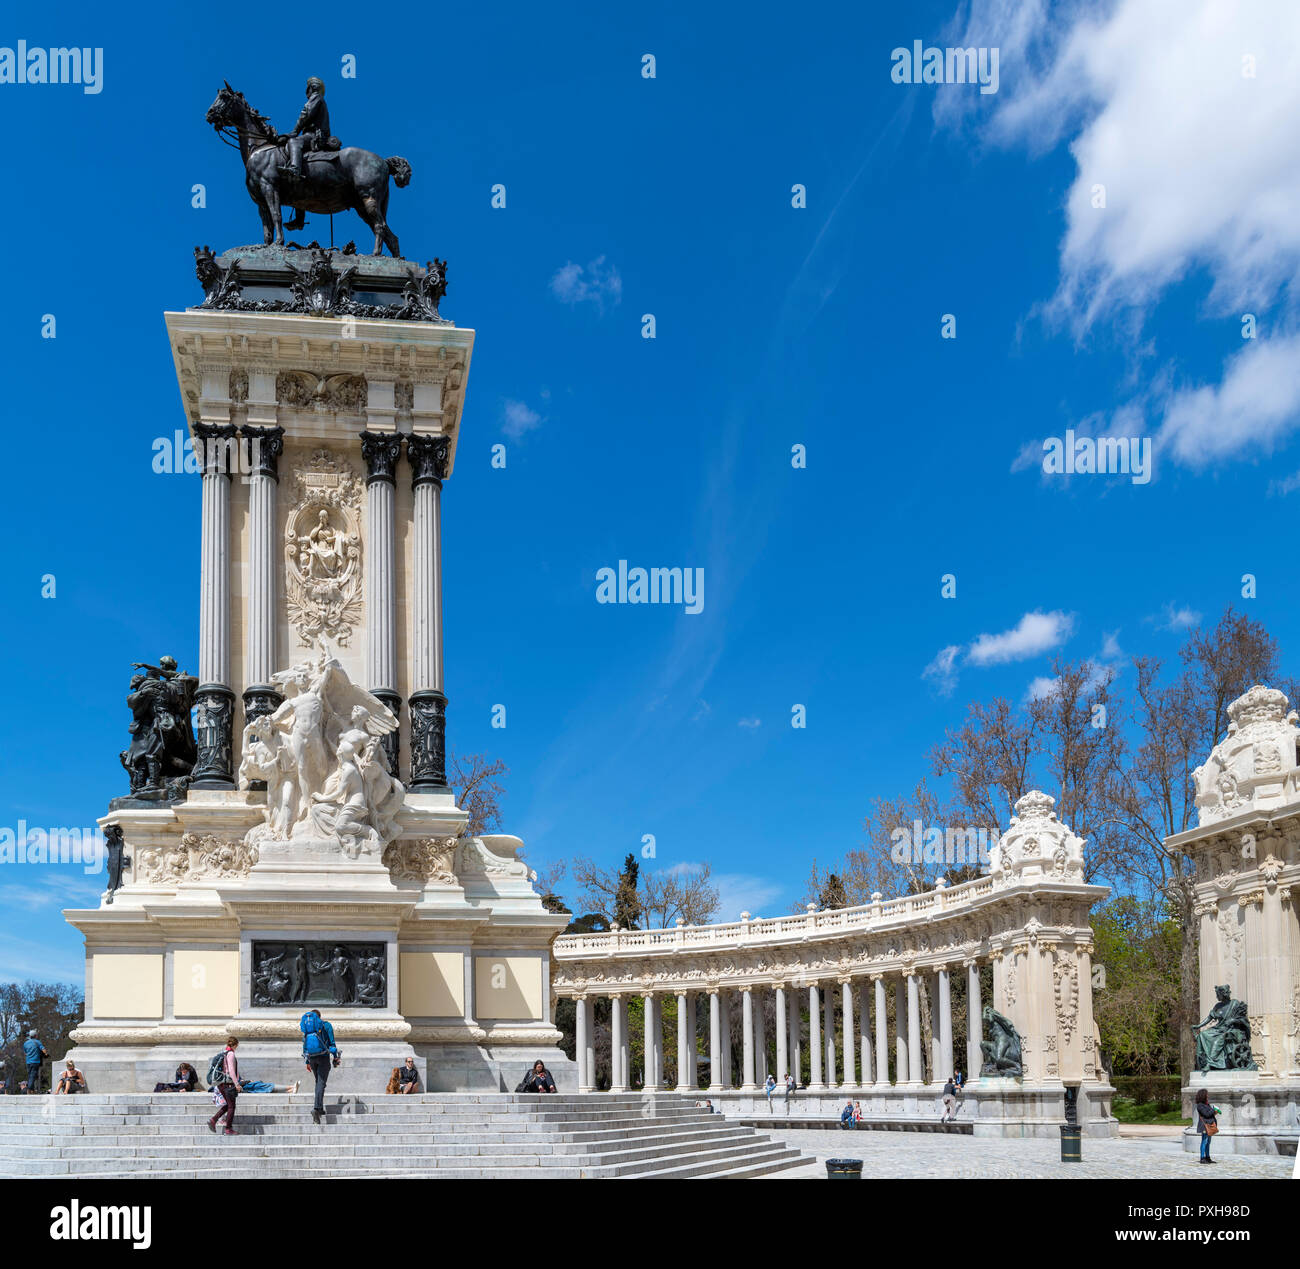 L'Alfonso XII monument, Parque del Buen Retiro, Madrid, Espagne. Banque D'Images